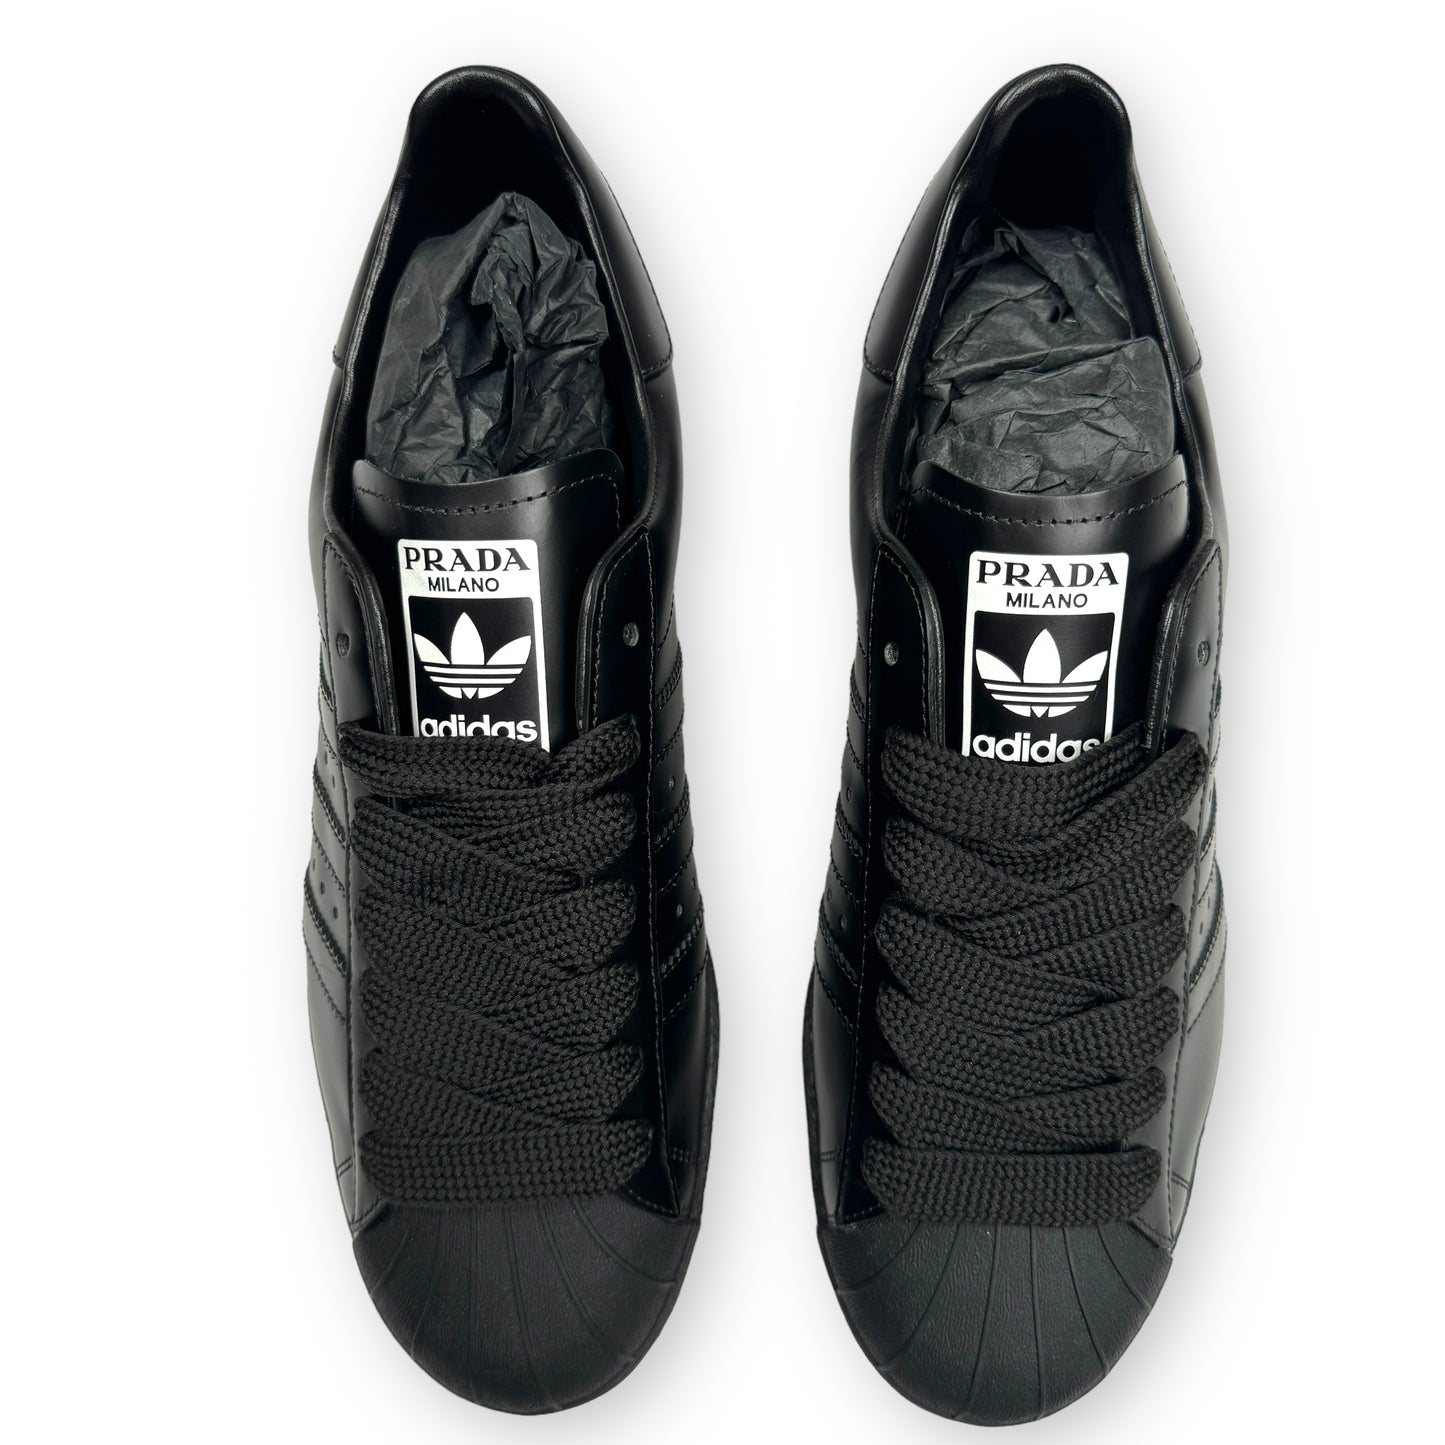 Prada x Adidas Superstar Black Leather